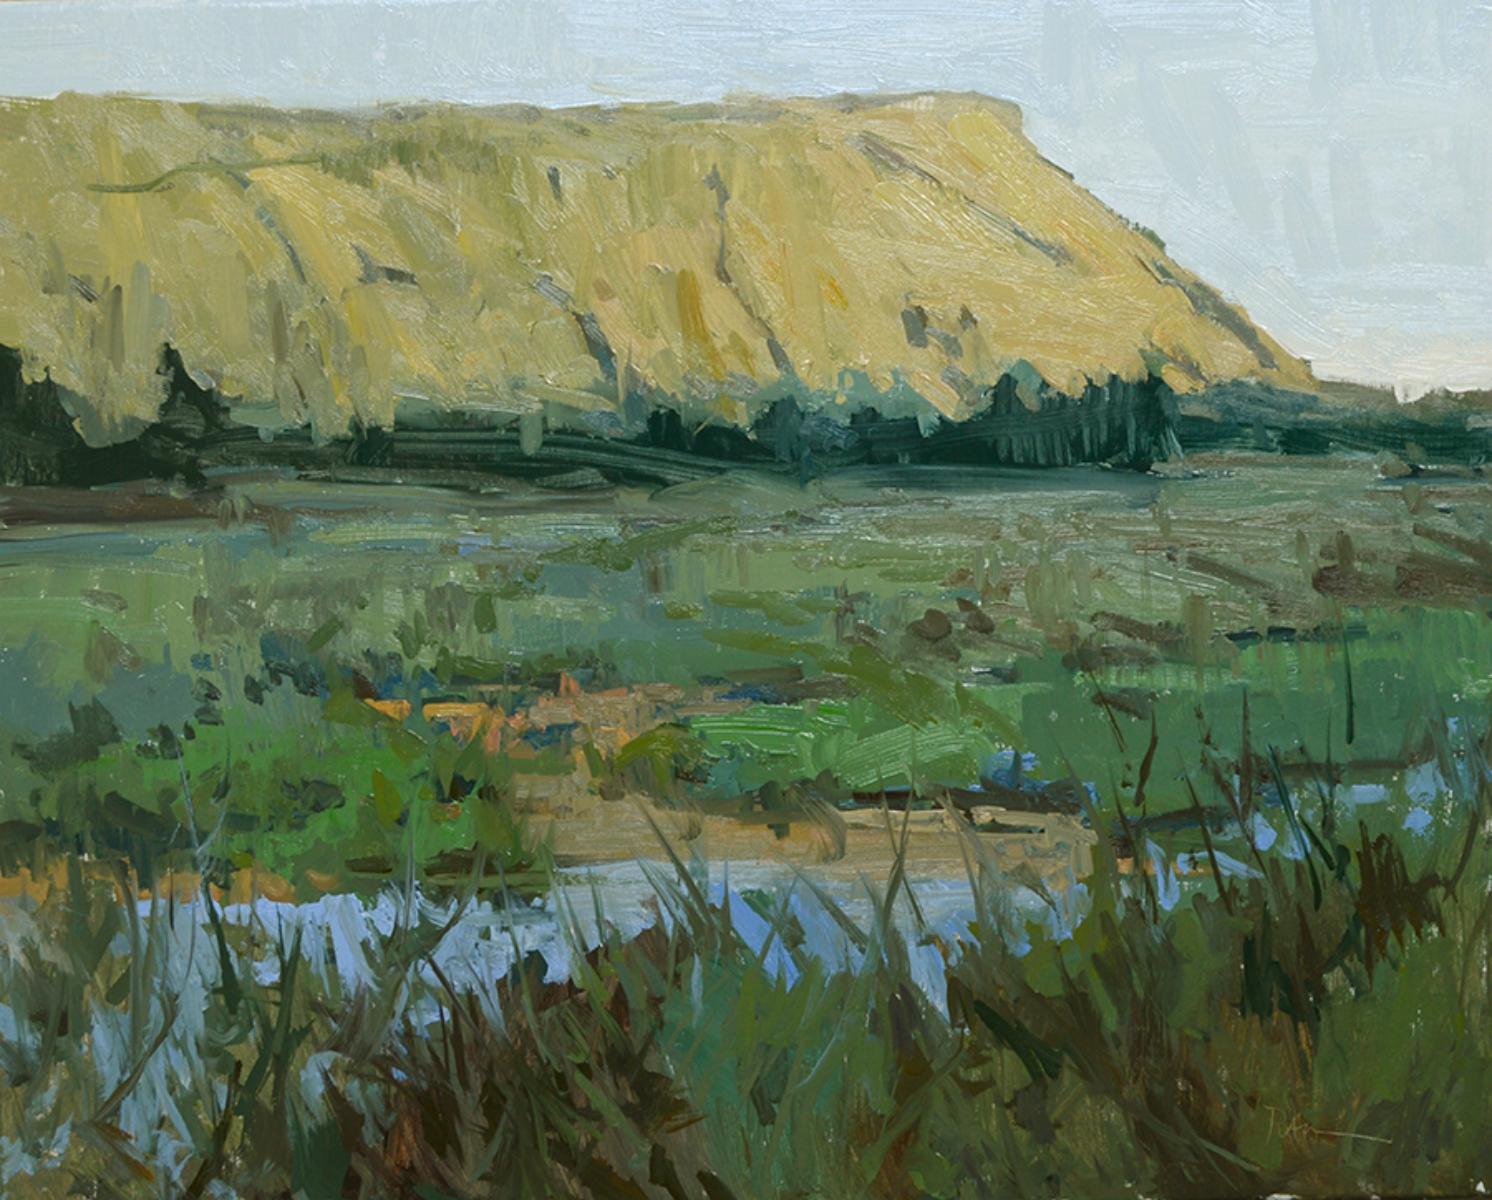 Island Living, American Impressionism, Hawaii, Oil Painters of America, Landscape - American Impressionist Painting by Lori Putnam